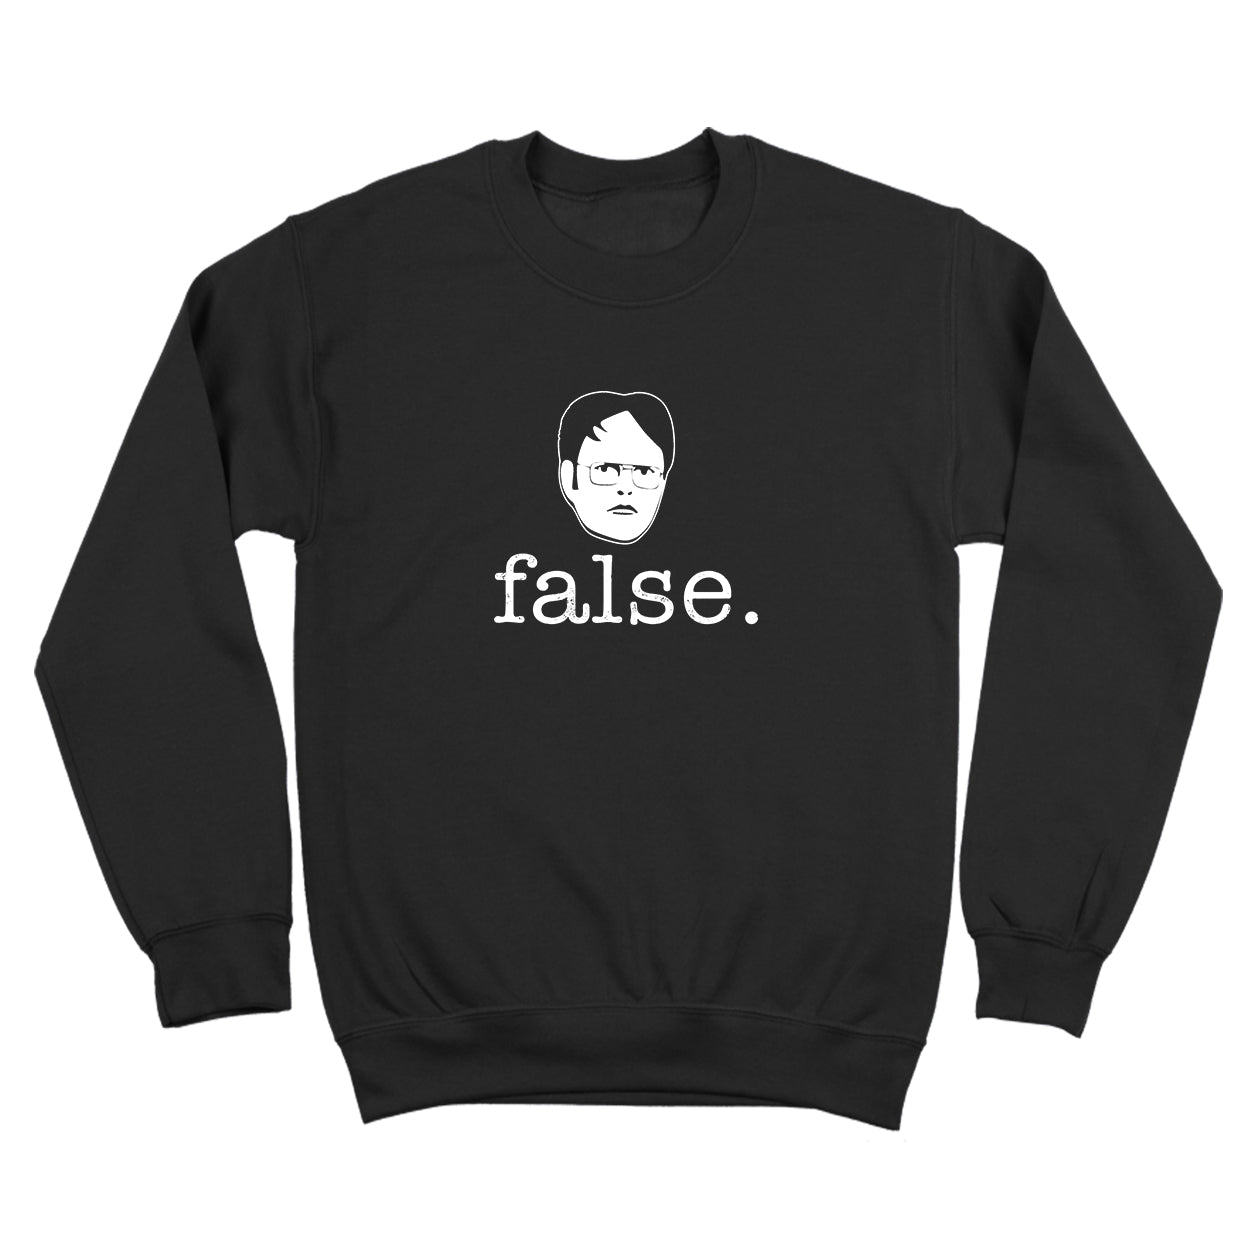 False - Dwight Schrute